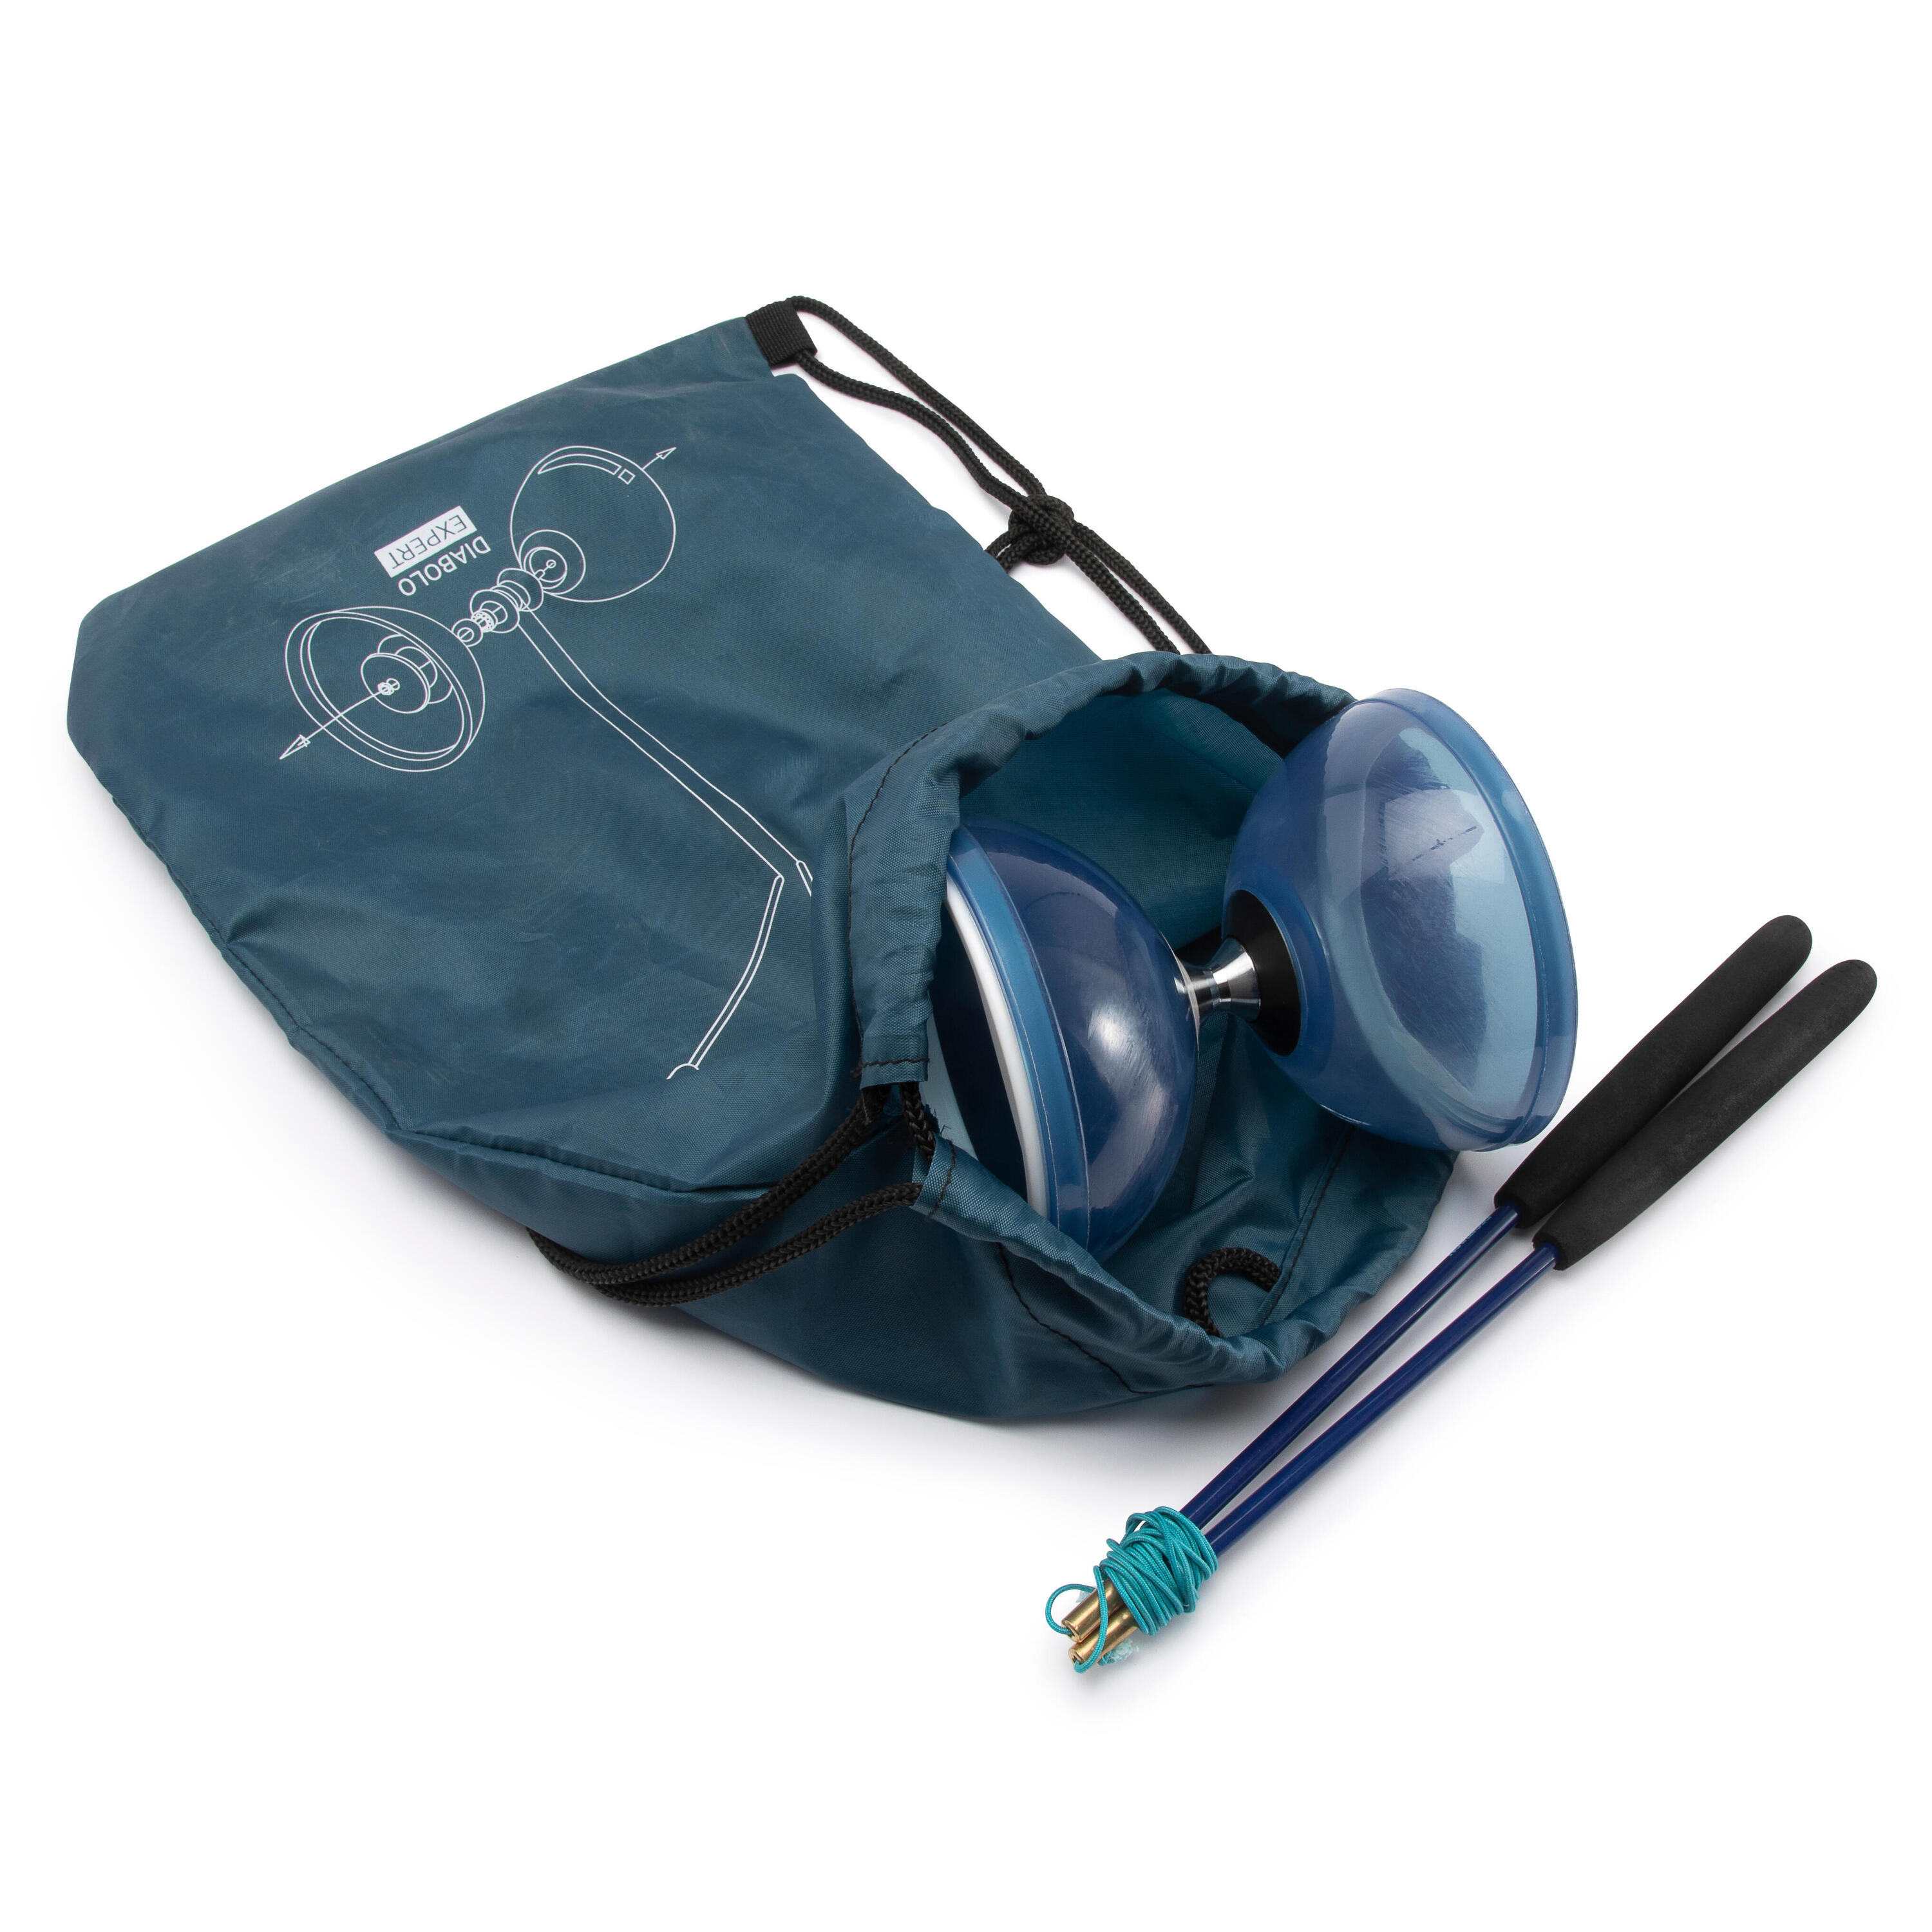 Bearing Diabolo with Fibreglass Sticks and Carrying Bag 500 - Blue 4/10